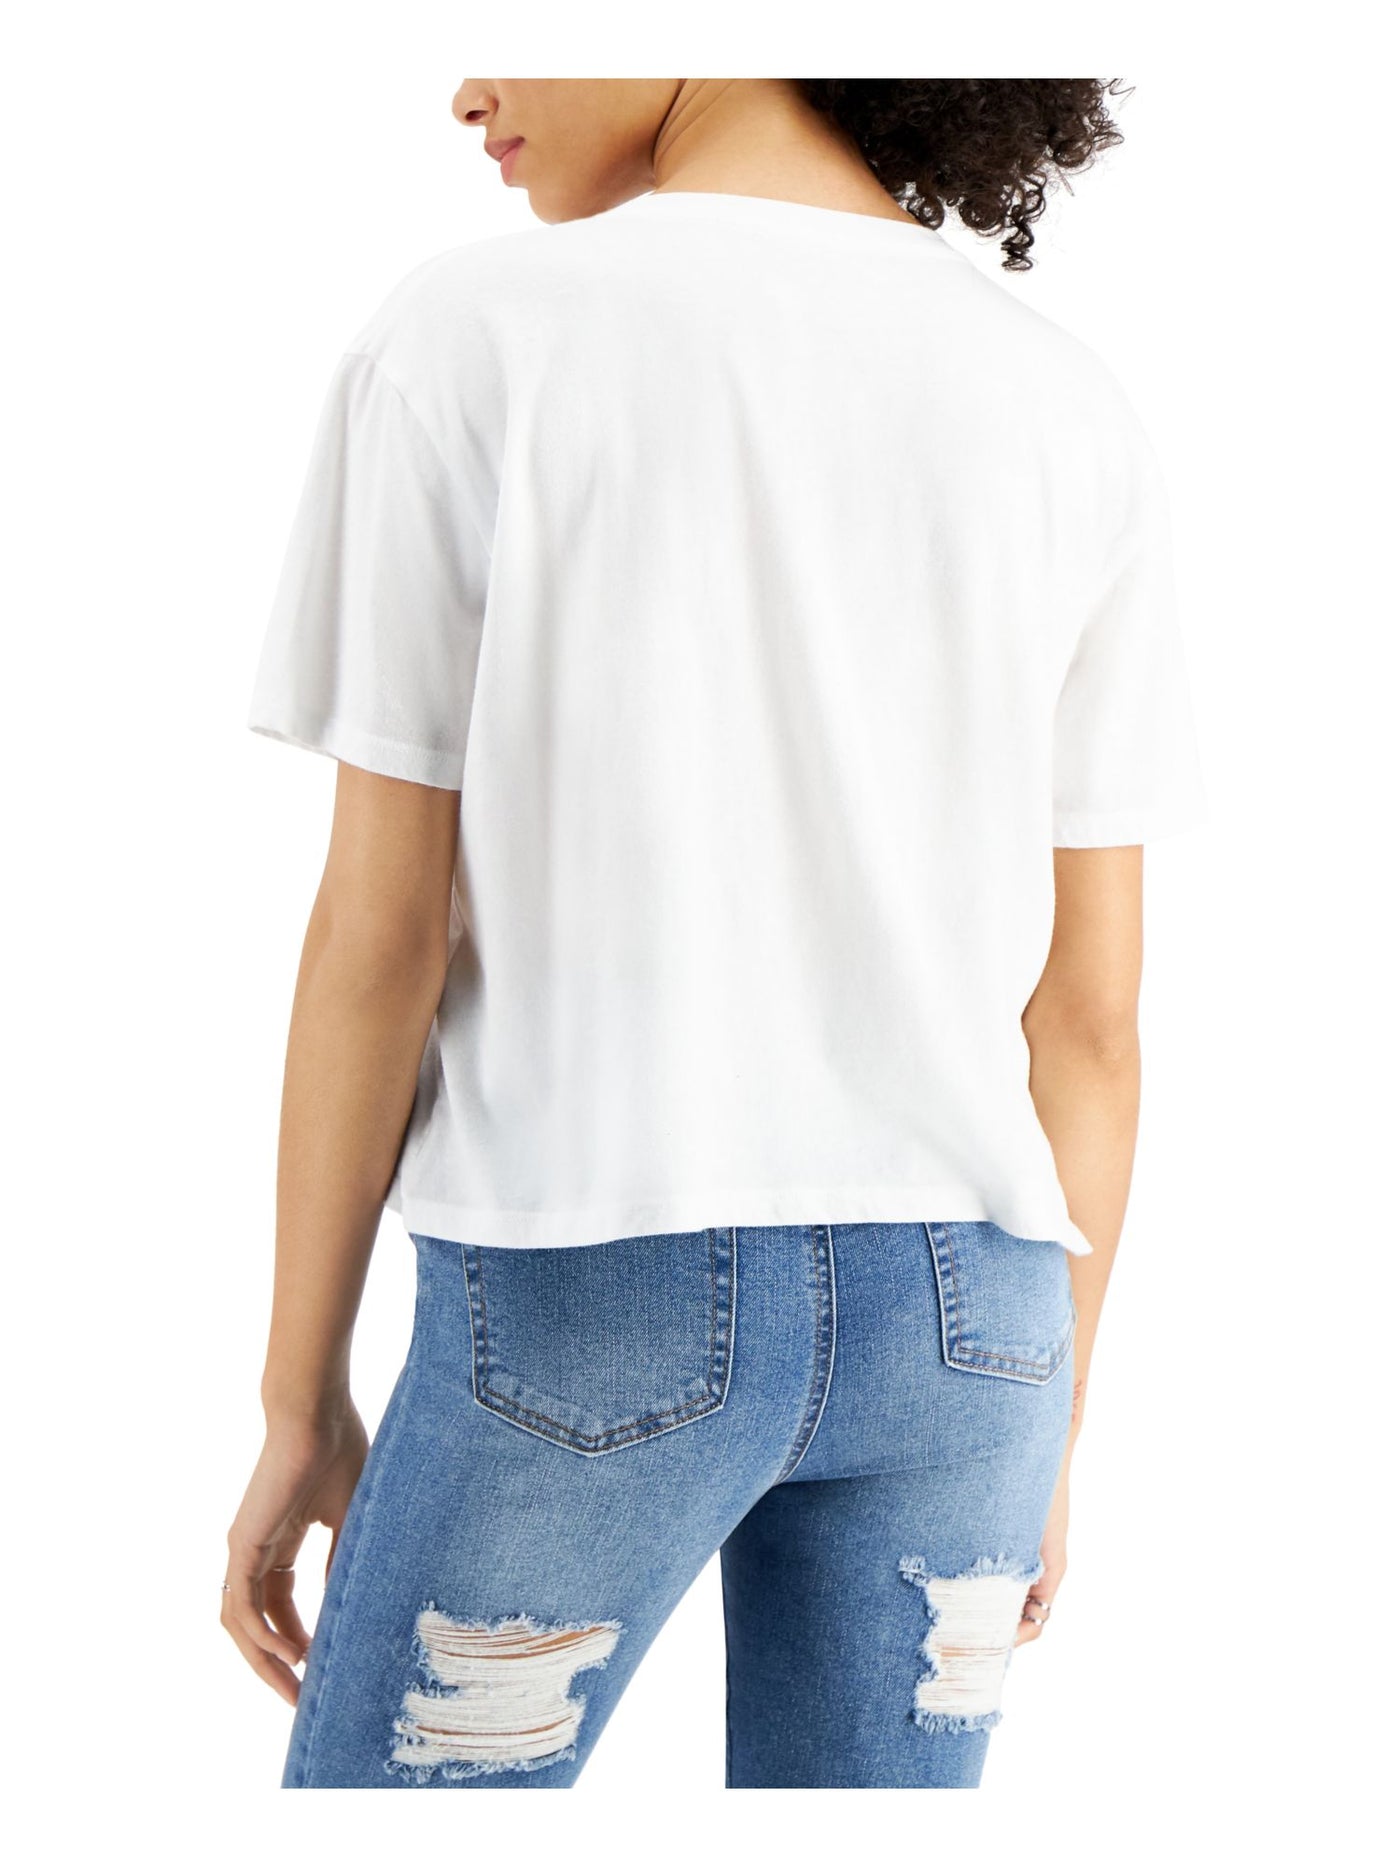 GRAYSON THREADS Womens White Cotton Blend Printed Short Sleeve Crew Neck T-Shirt L